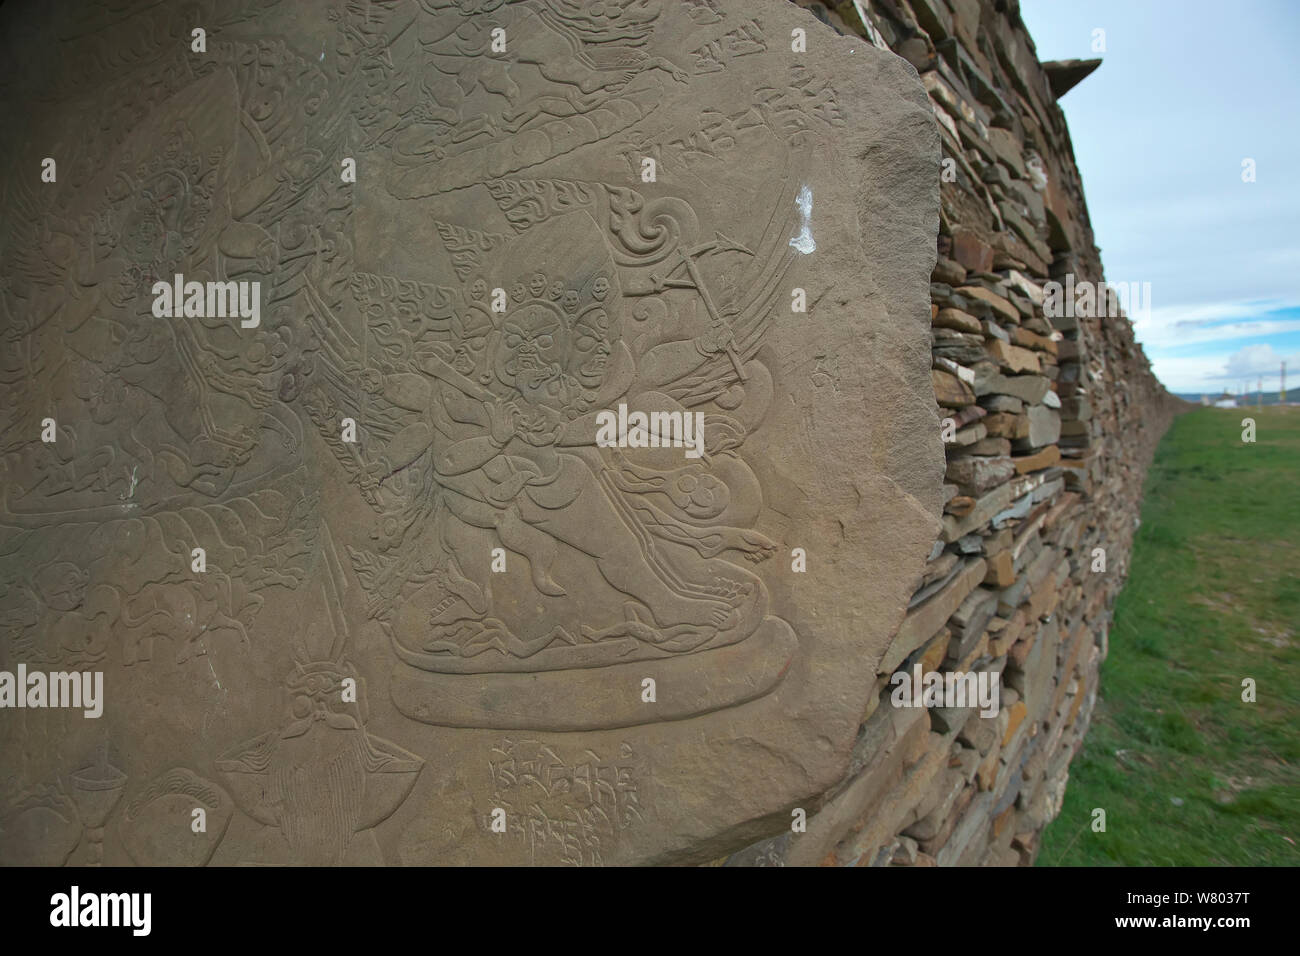 Carving of wrathful or guardian deity, Serxu, Shiqu county, Sichuan Province, Qinghai-Tibet Plateau, China. August 2010. Stock Photo